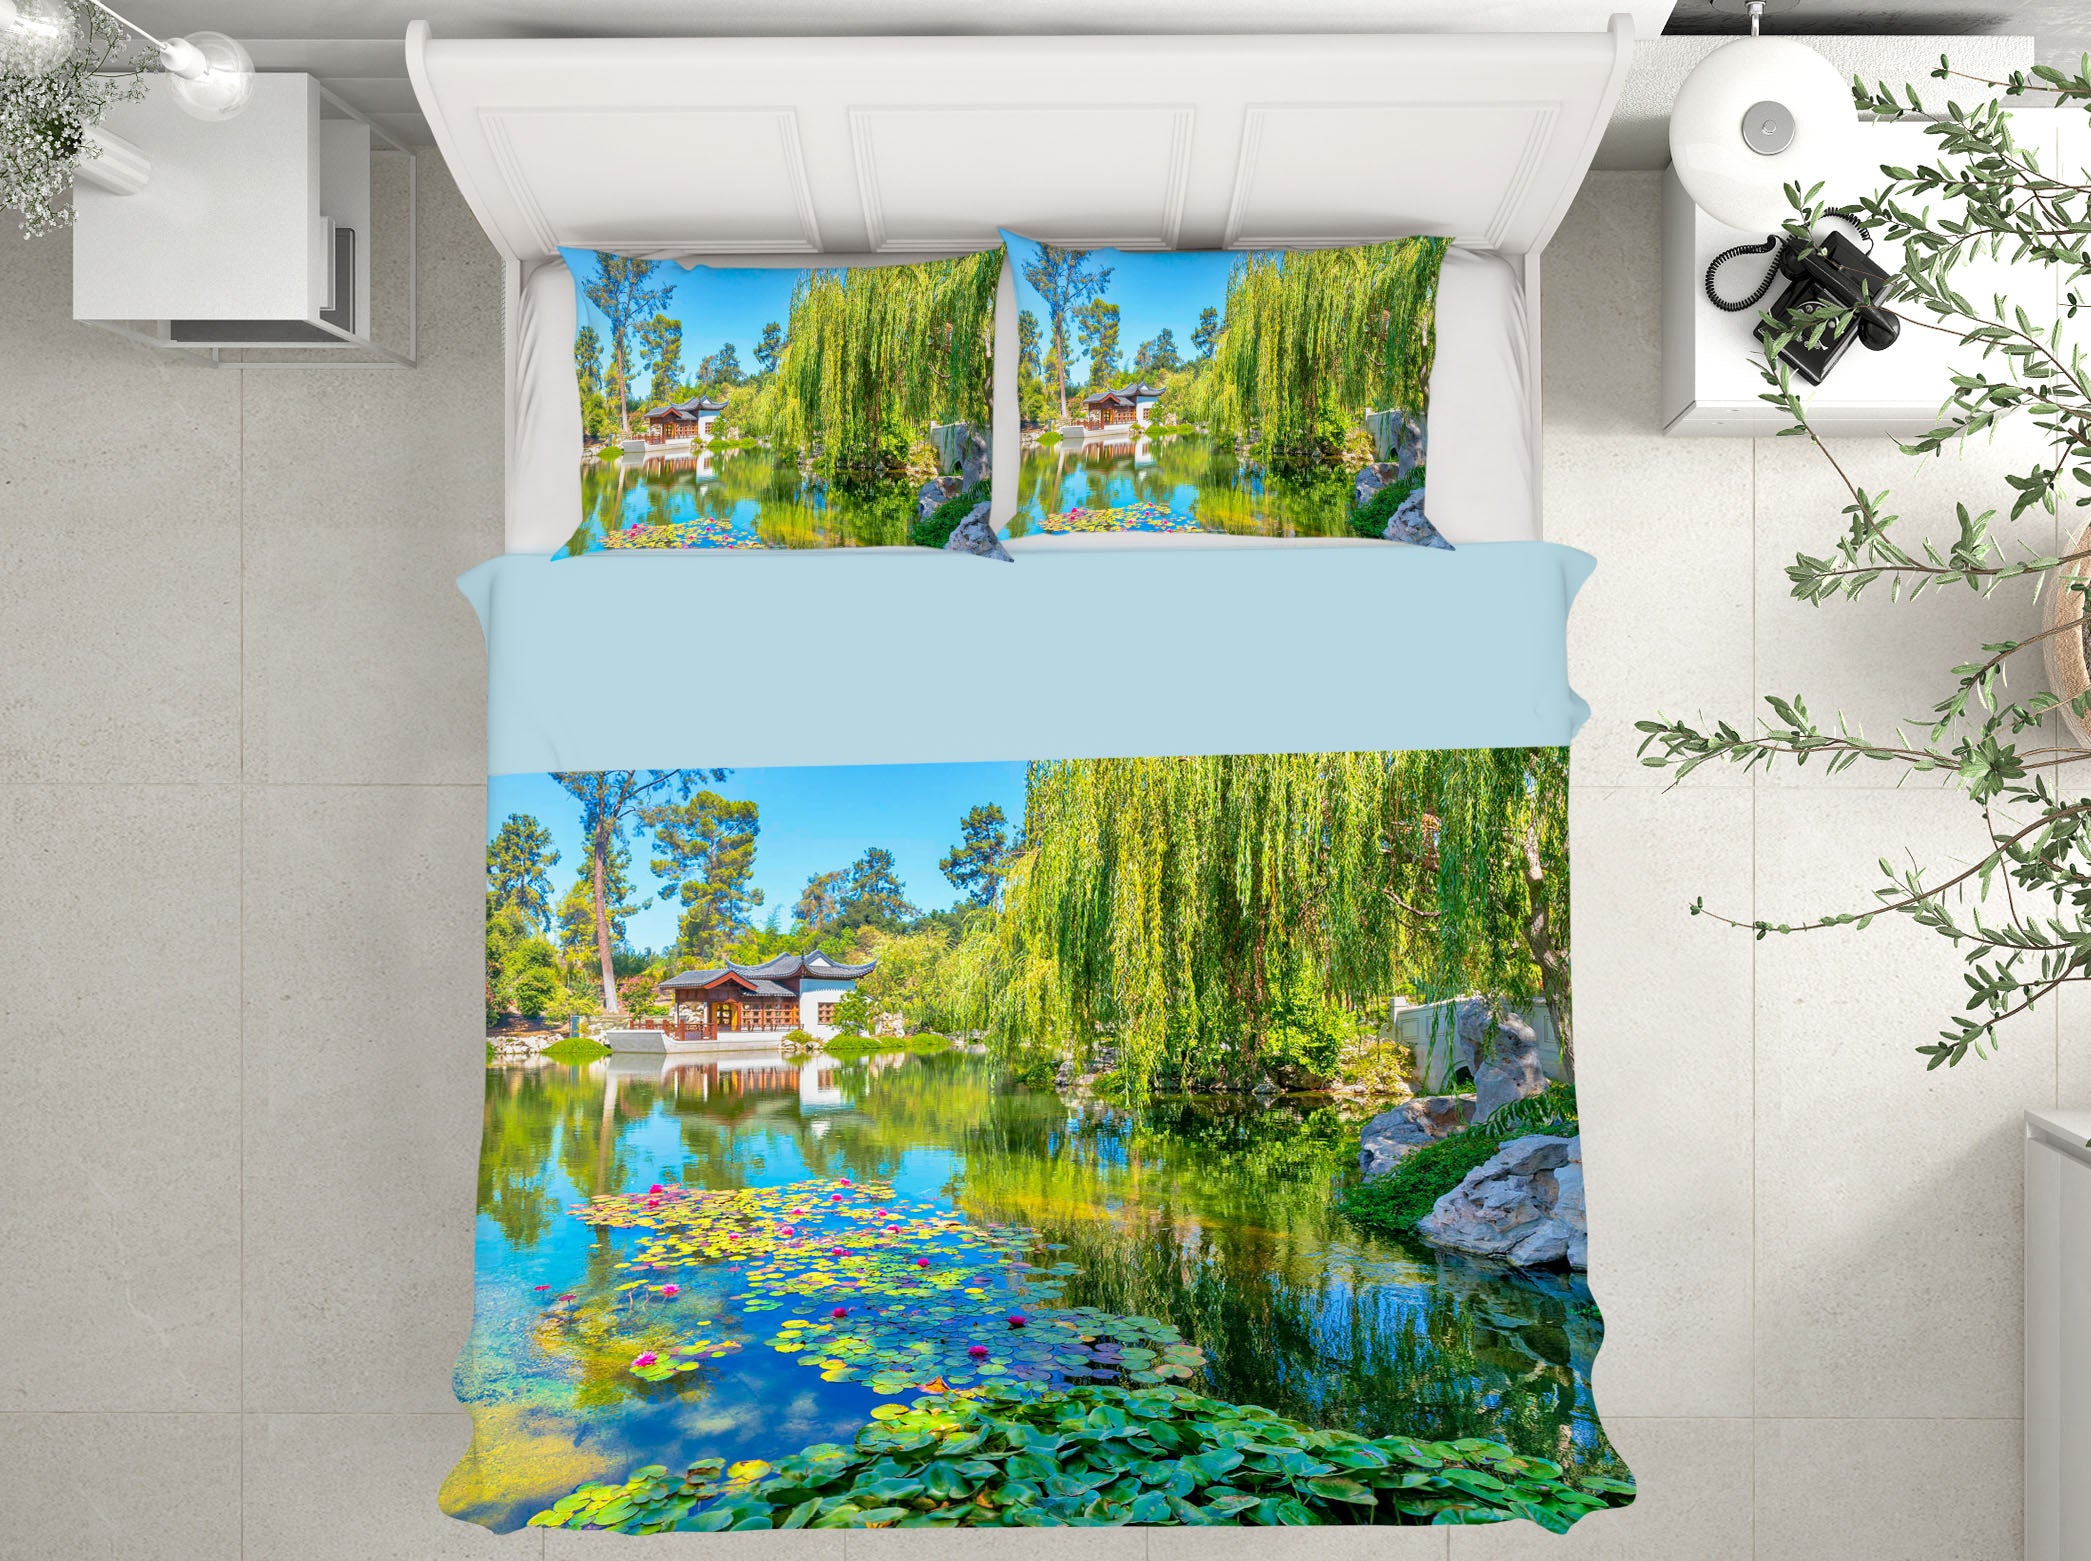 3D Huntington Garden 033 Marco Carmassi Bedding Bed Pillowcases Quilt